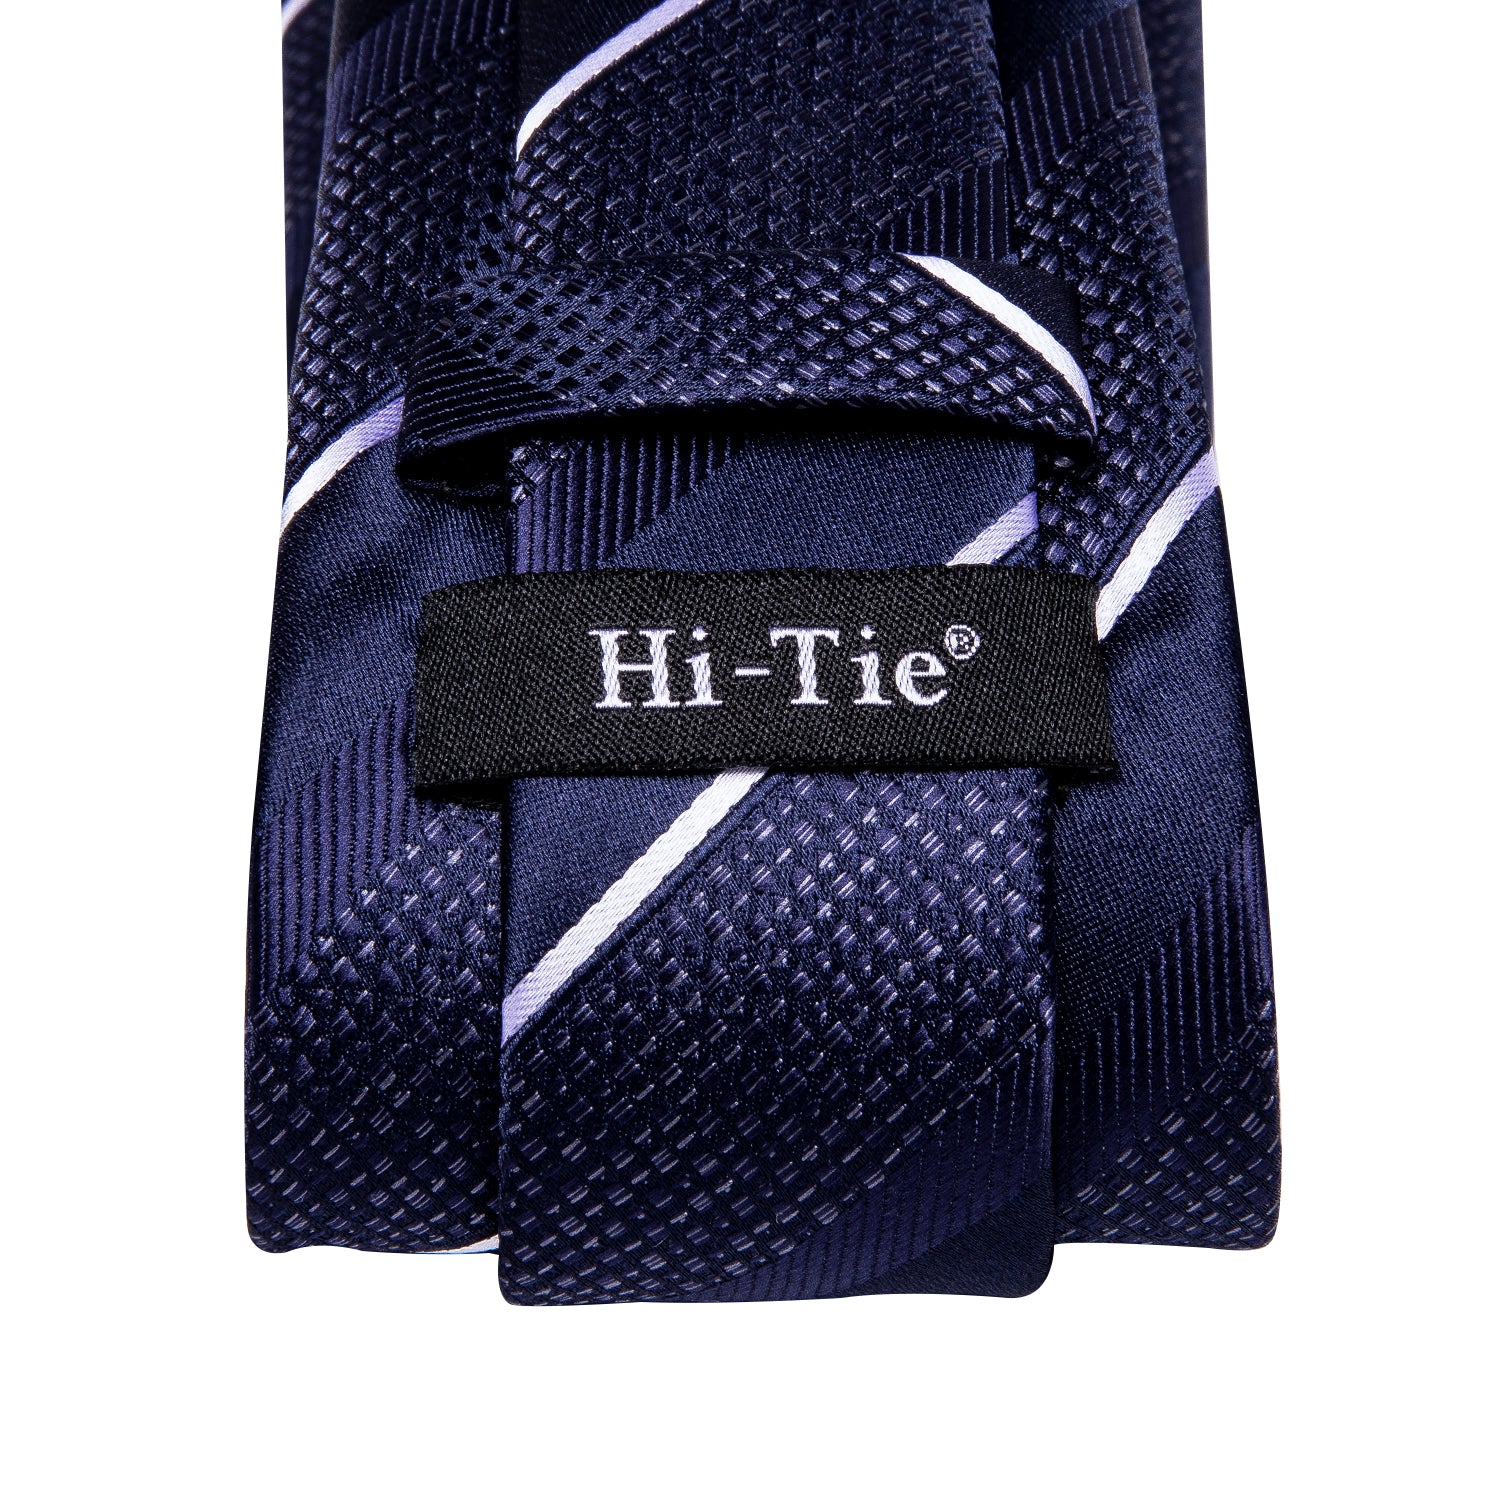 Deep Blue White Striped Tie Pocket Square Cufflinks Set